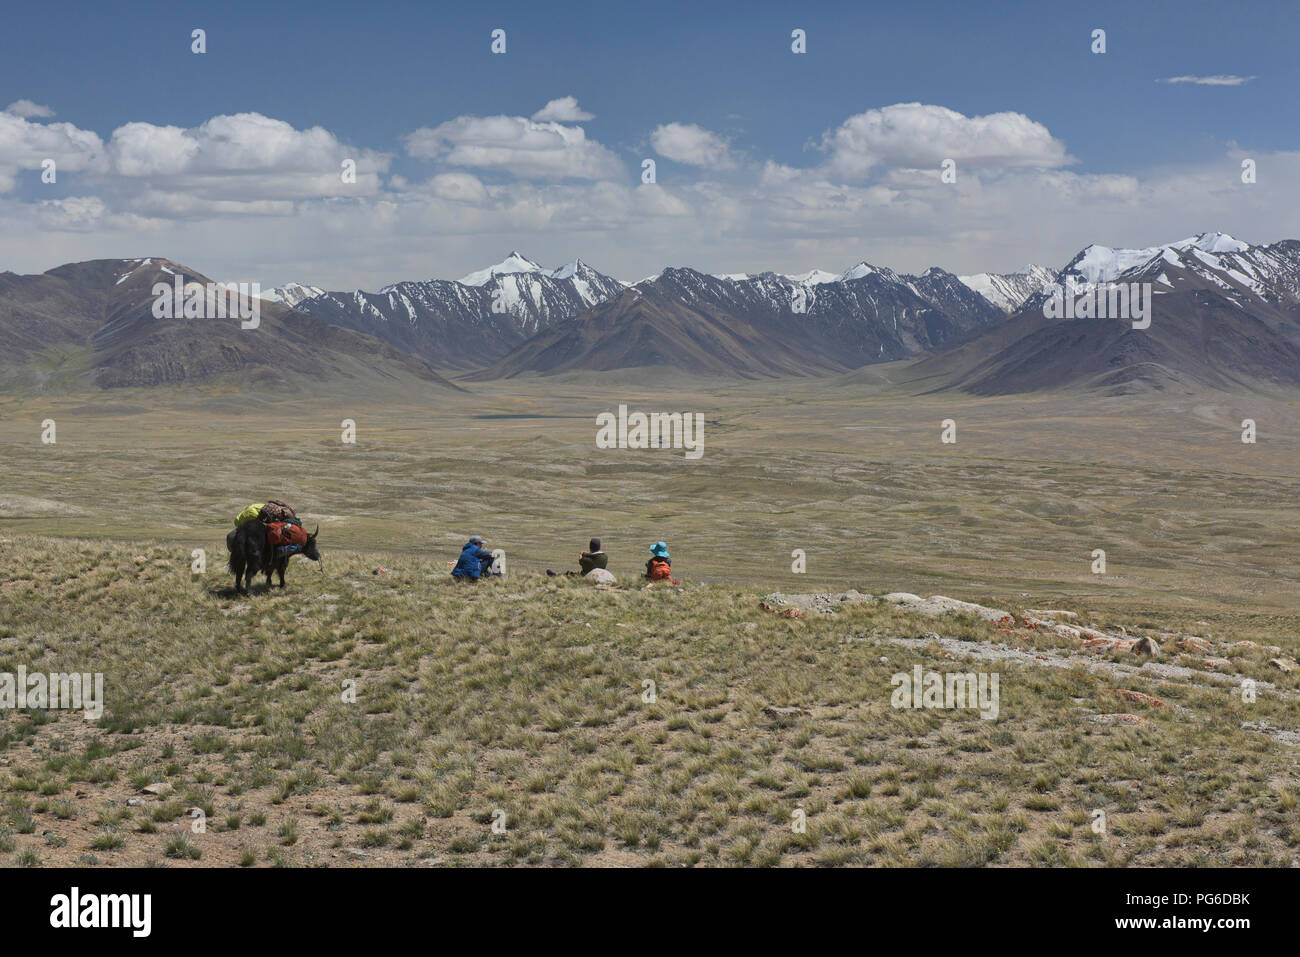 Looking into the Great Pamir Range of Afghanistan while trekking near Lake Zorkul, Tajikistan Stock Photo